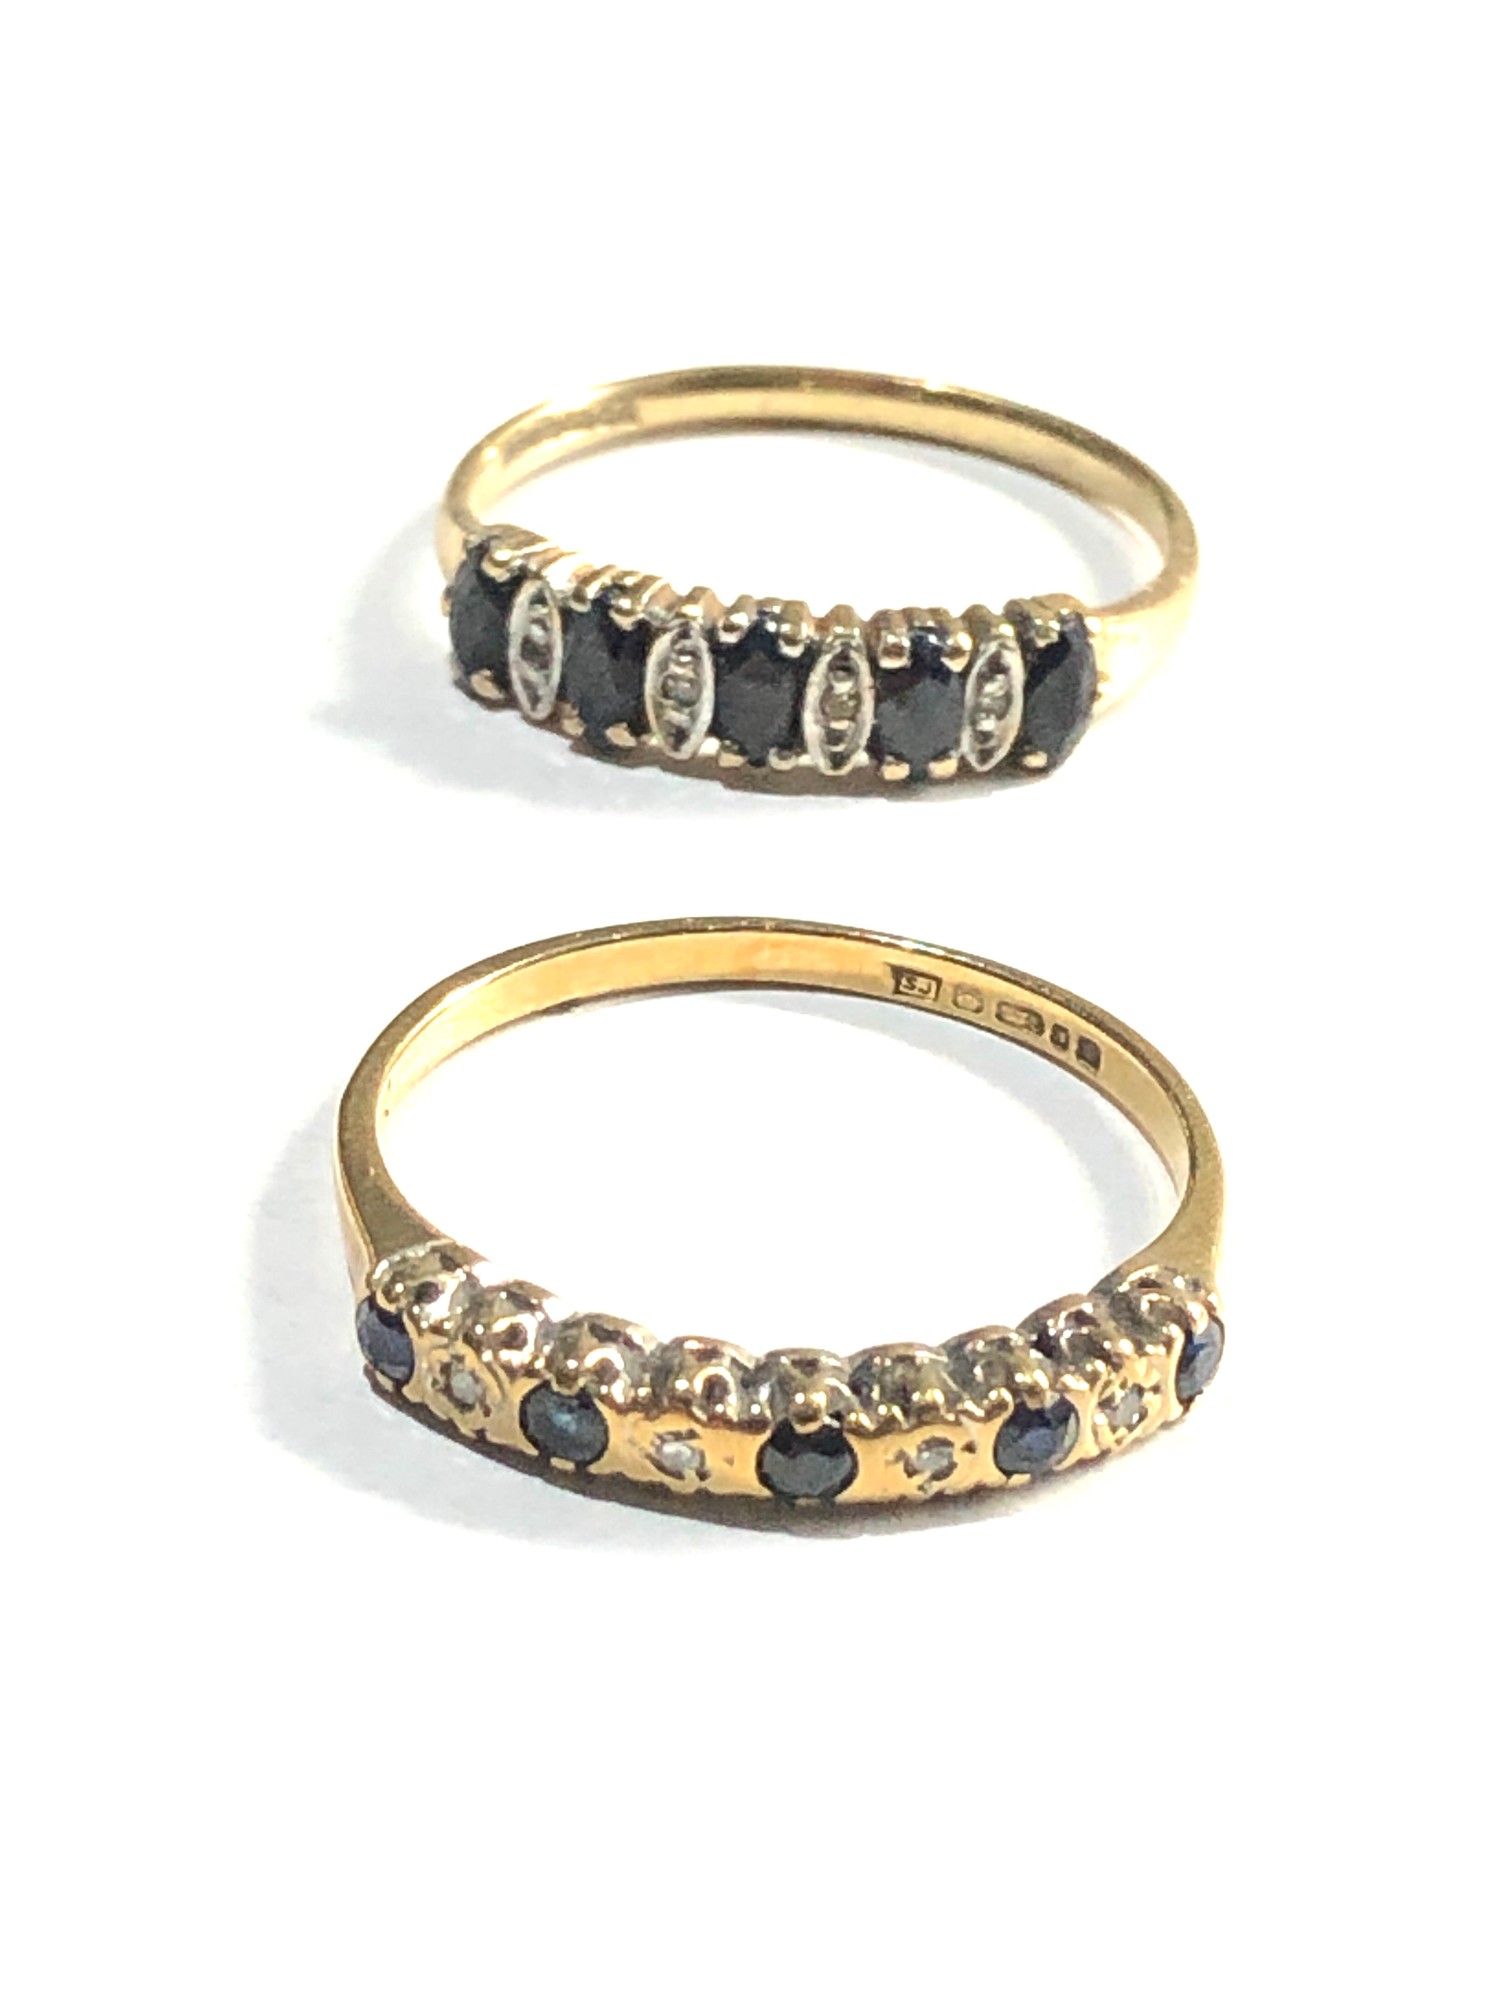 2 x 9ct Gold rings w/ diamond & sapphire - Image 2 of 3